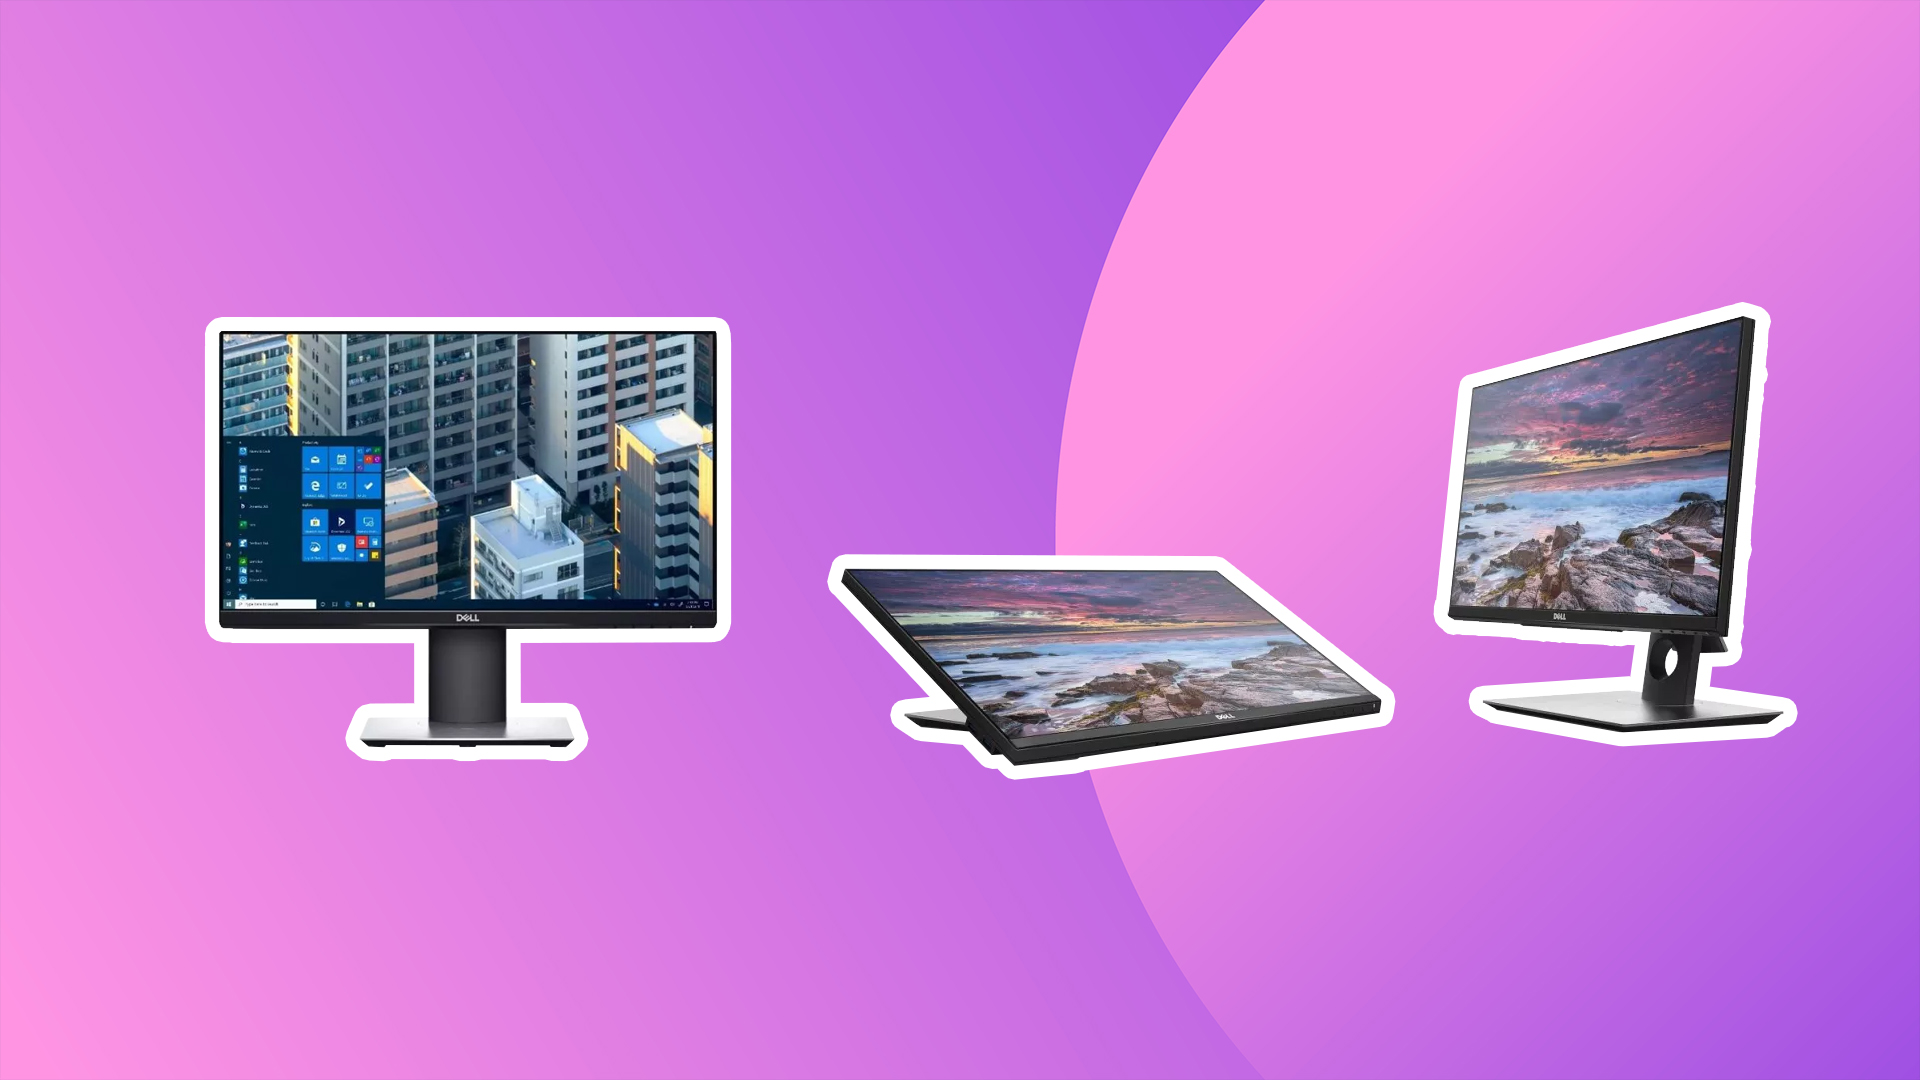  programming Ultra HD Wallpapers for 4K UHD ☆  Widescreen & UltraWide ☆ Multi Display Desktop ☆ Tablet ☆ Smartphone ☆  Mobile